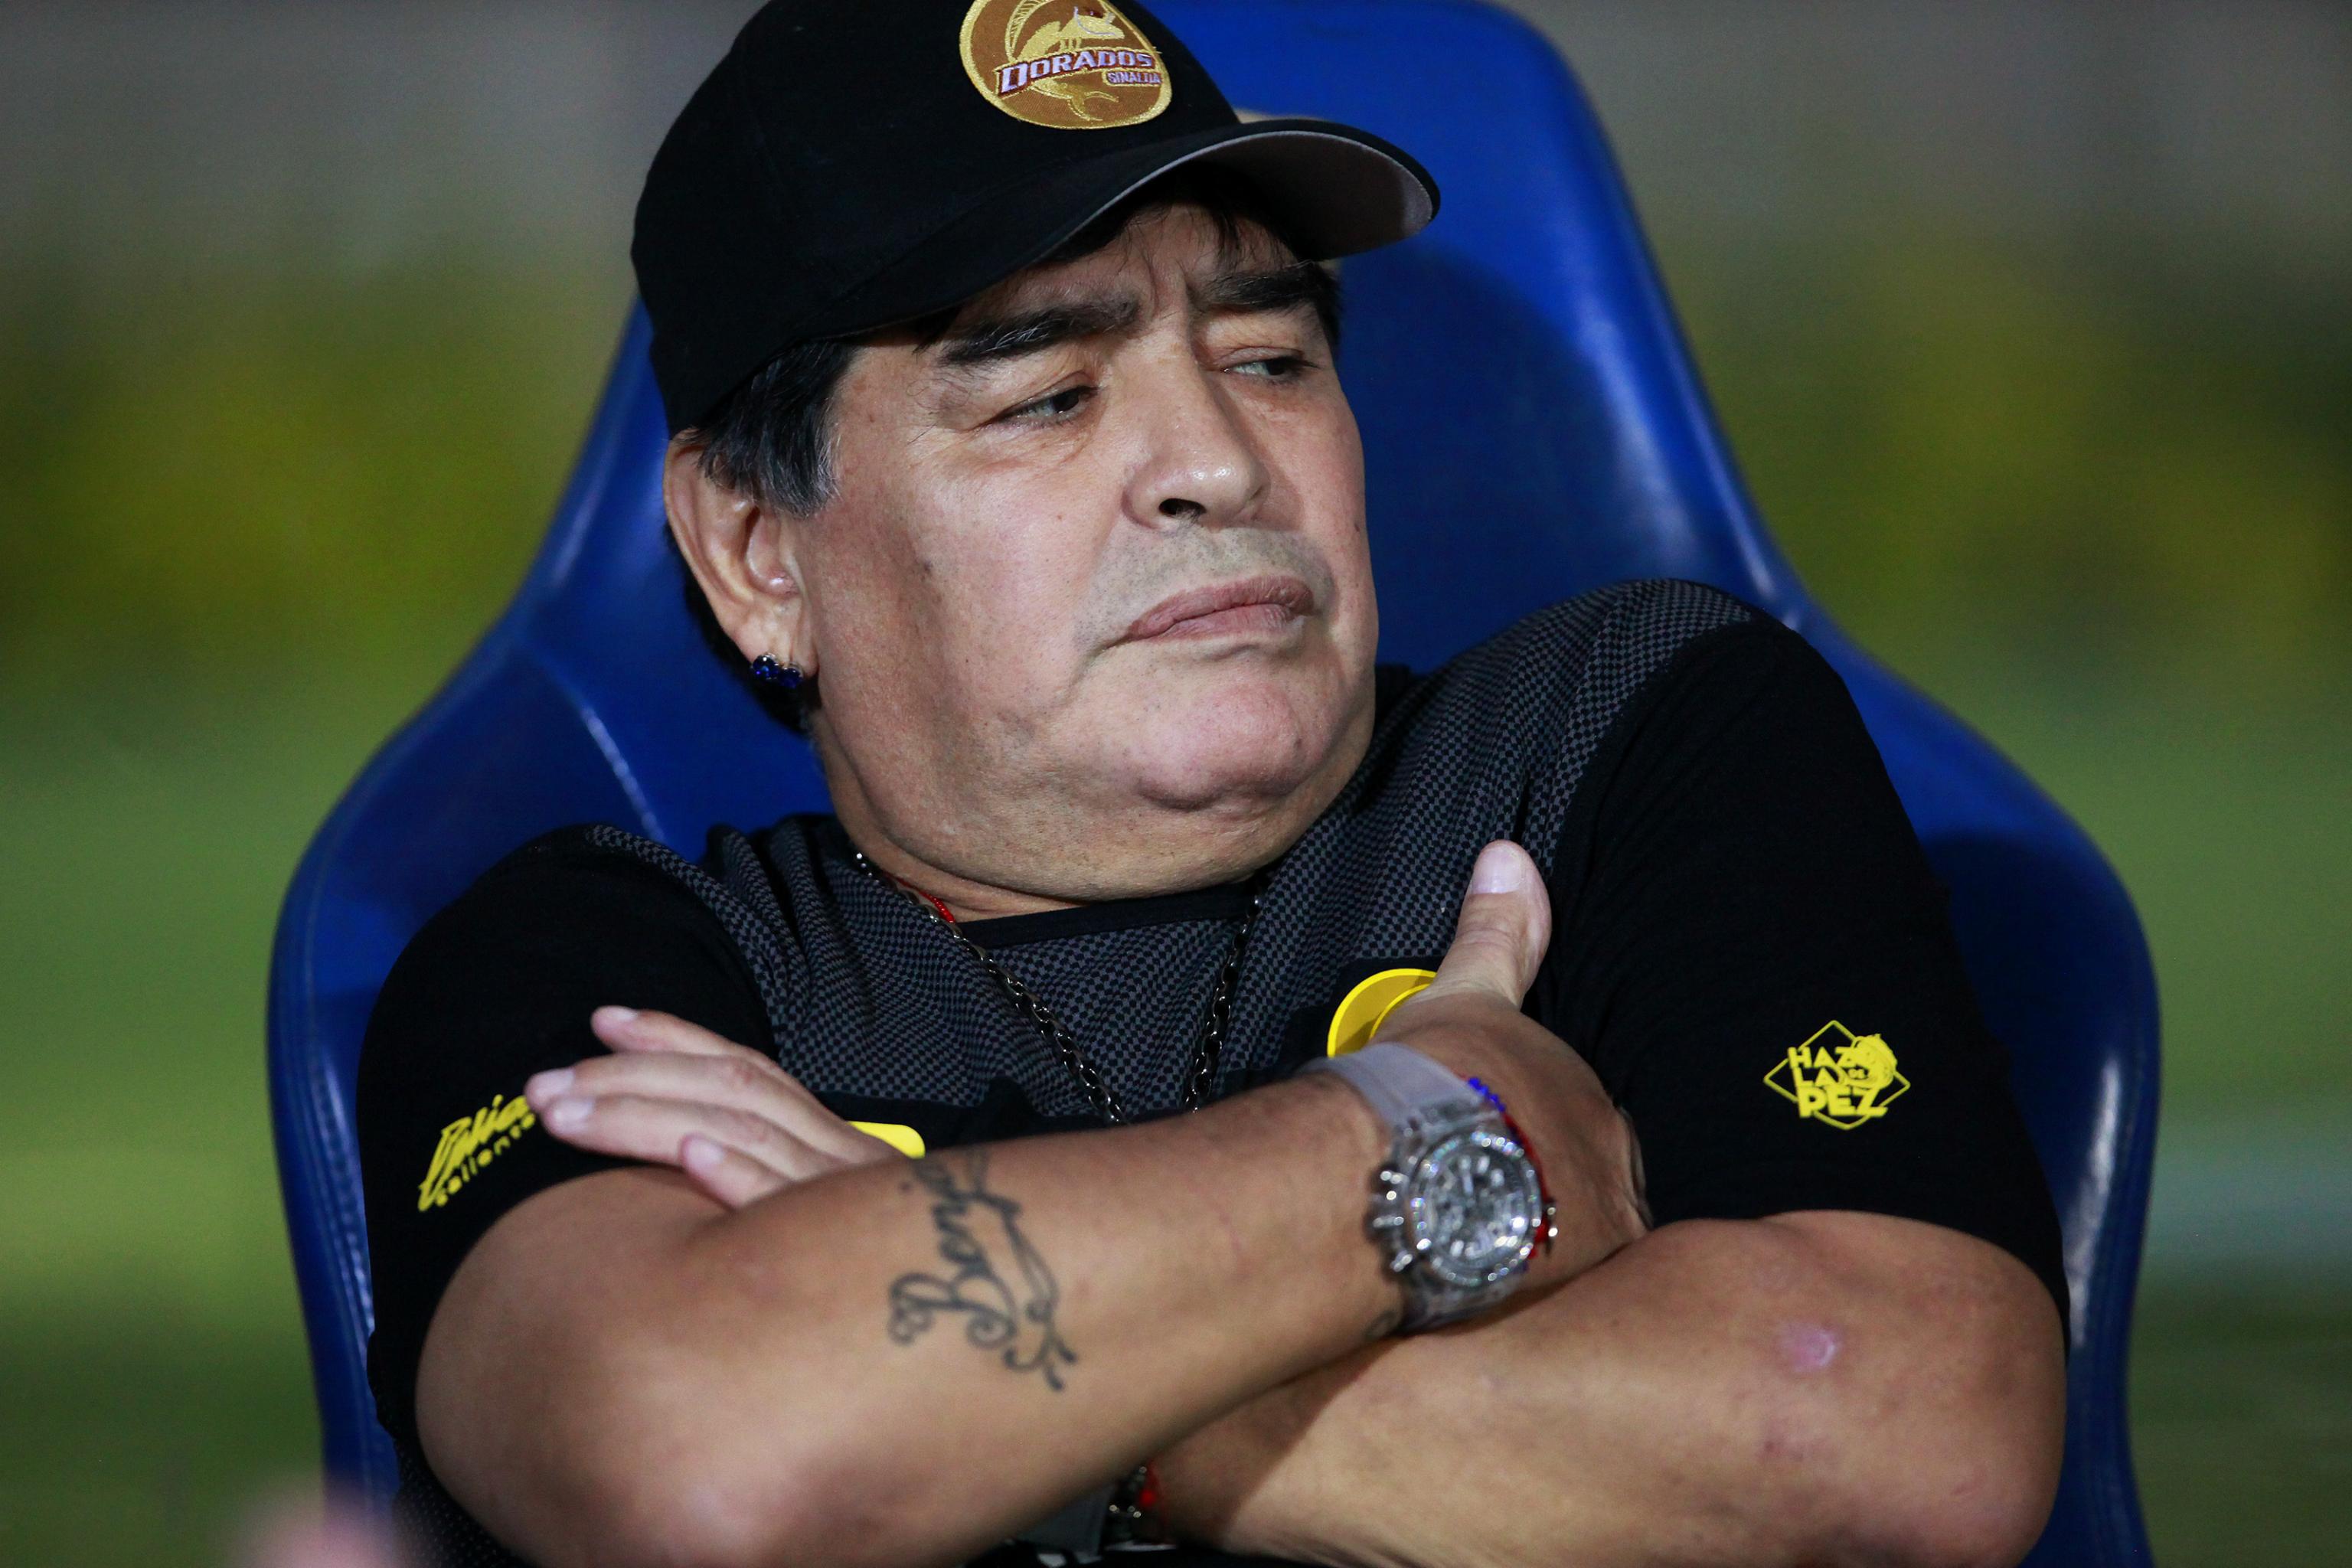 Football legend Diego Maradona passes away at 60